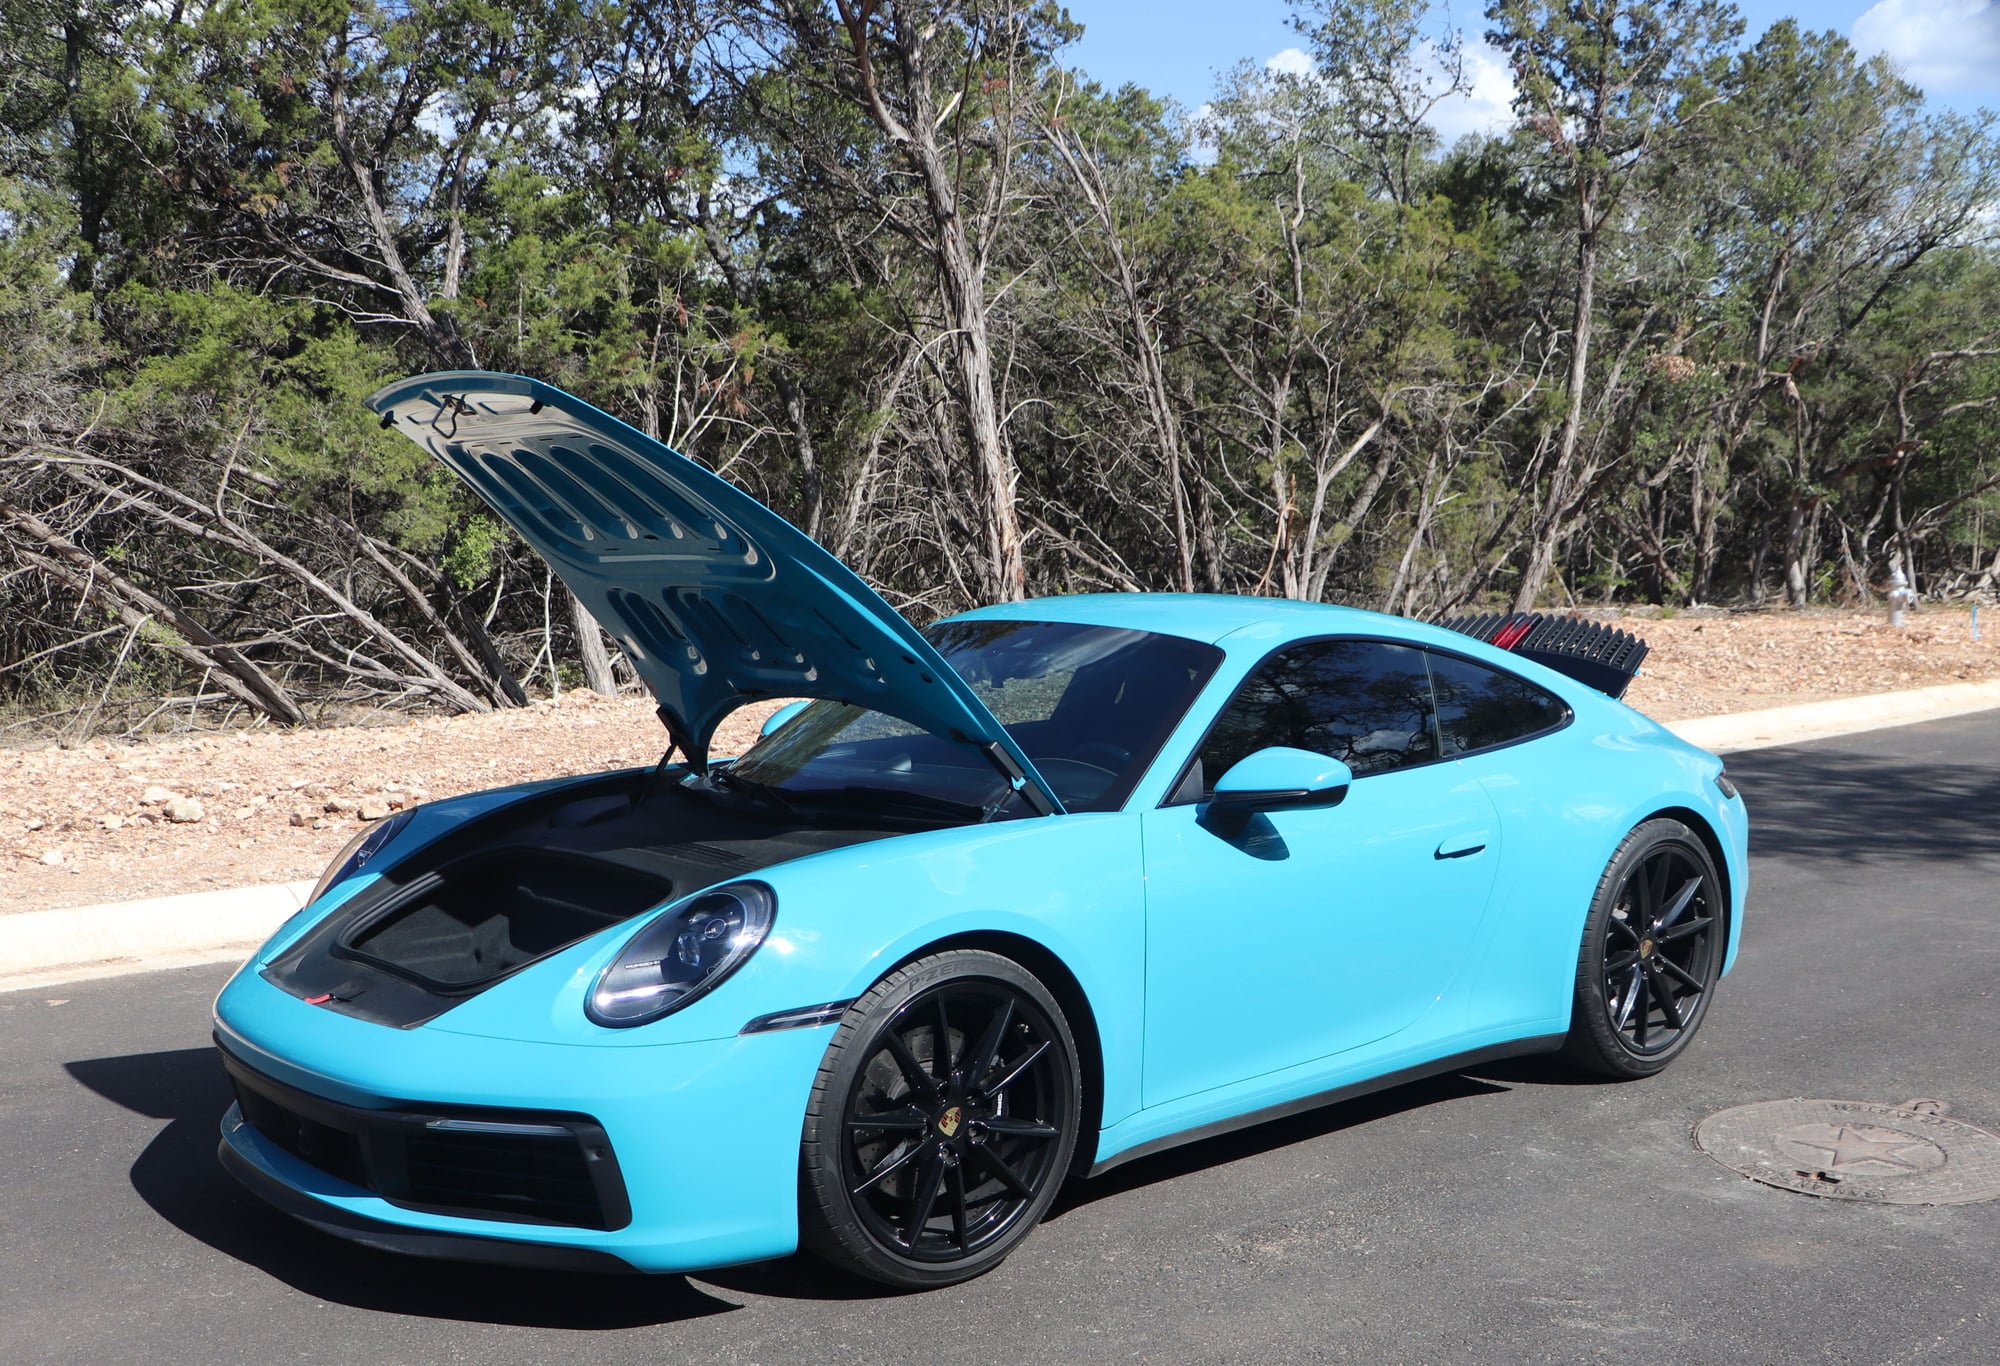 2020 Porsche 911 - 14k mile Miami Blue 992 CS - Used - VIN WP0AB2A98LS225847 - 14,000 Miles - 6 cyl - 2WD - Automatic - Coupe - Blue - San Antonio, TX 78231, United States